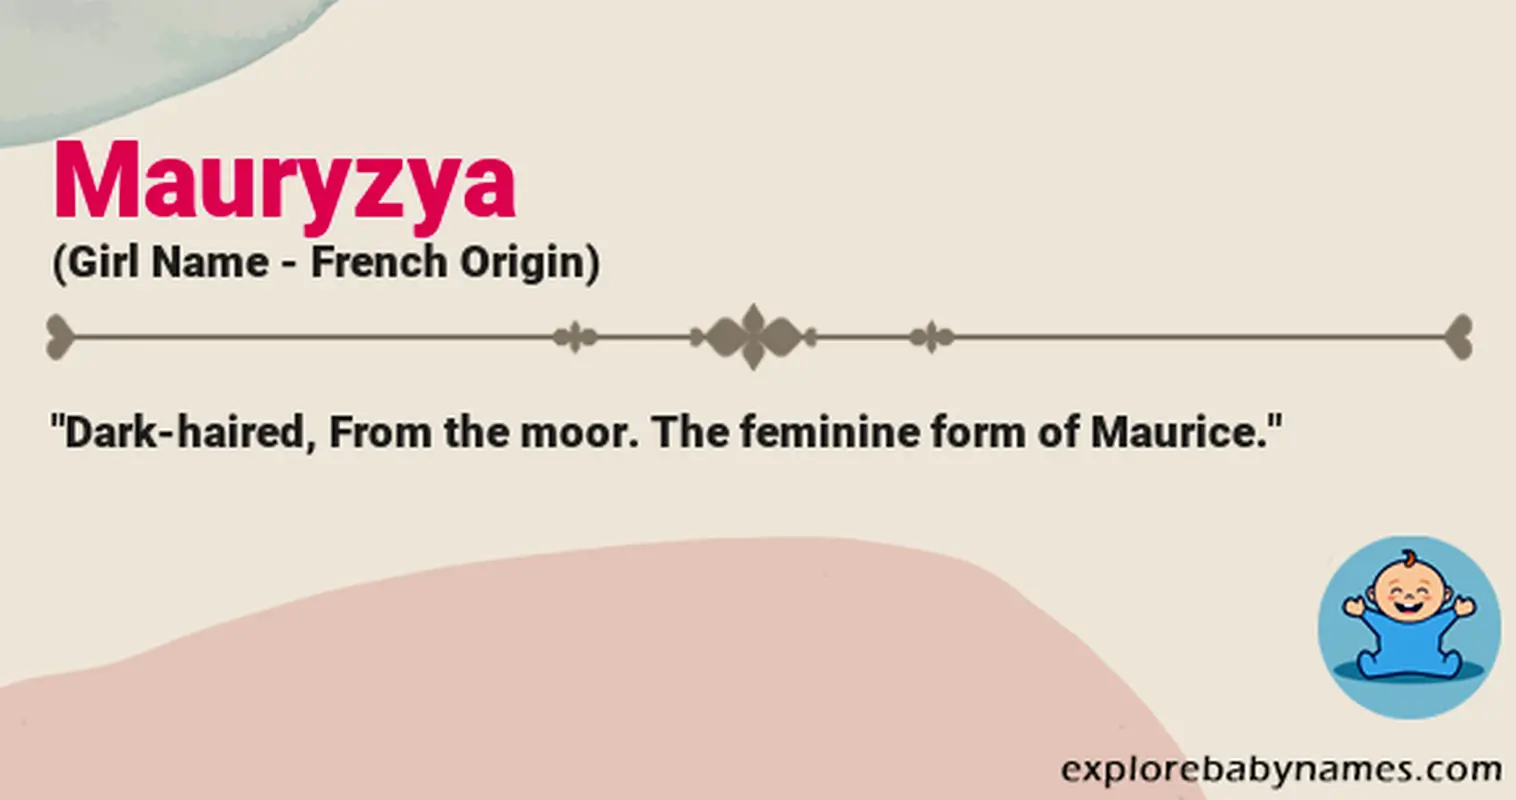 Meaning of Mauryzya